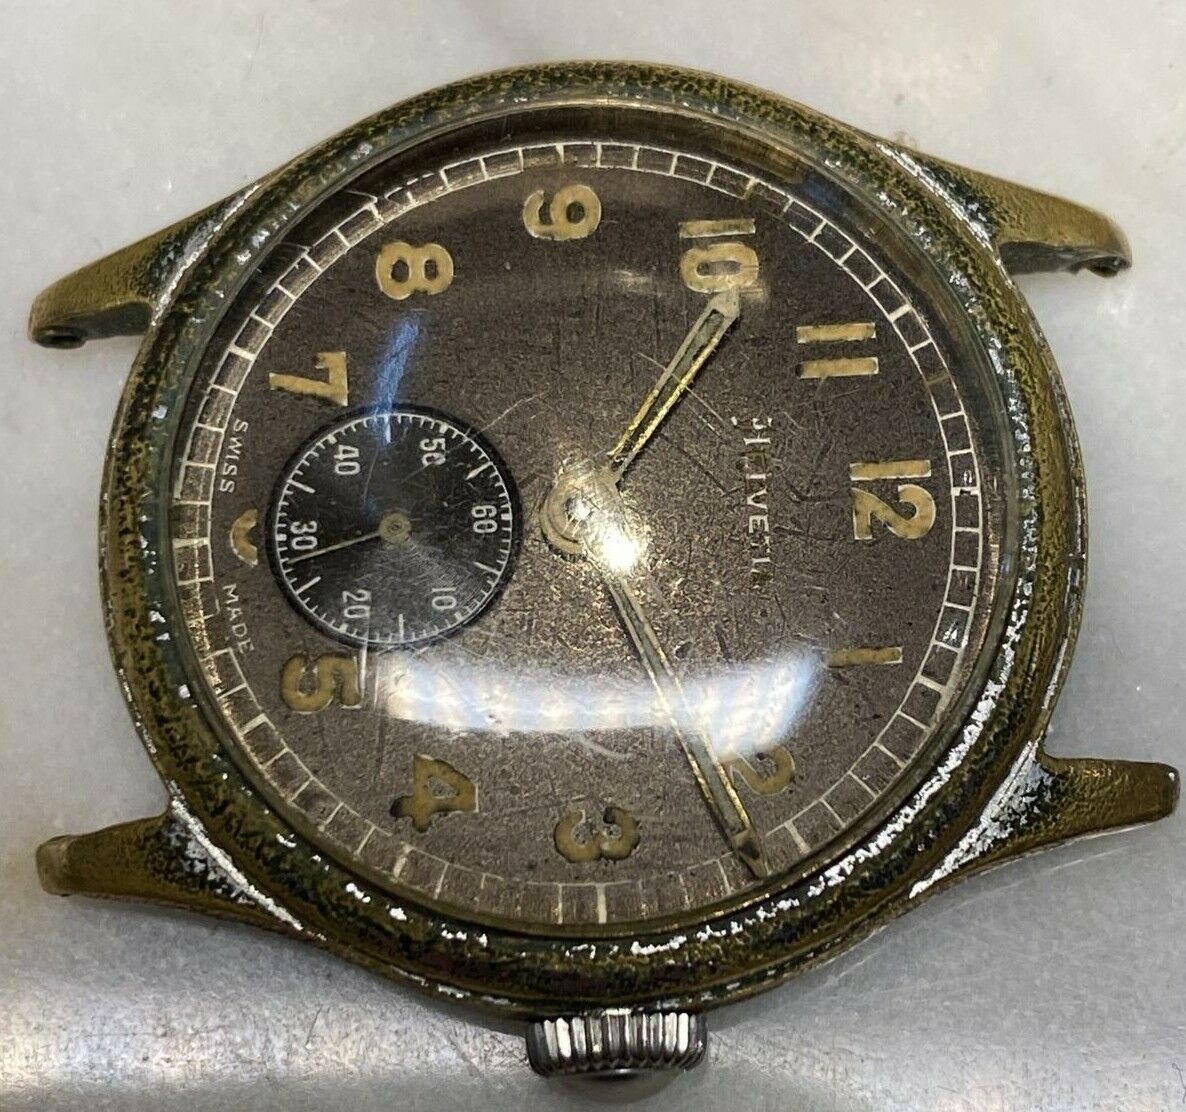 Vintage watch experience 古董手錶: Helvetia pilot watch